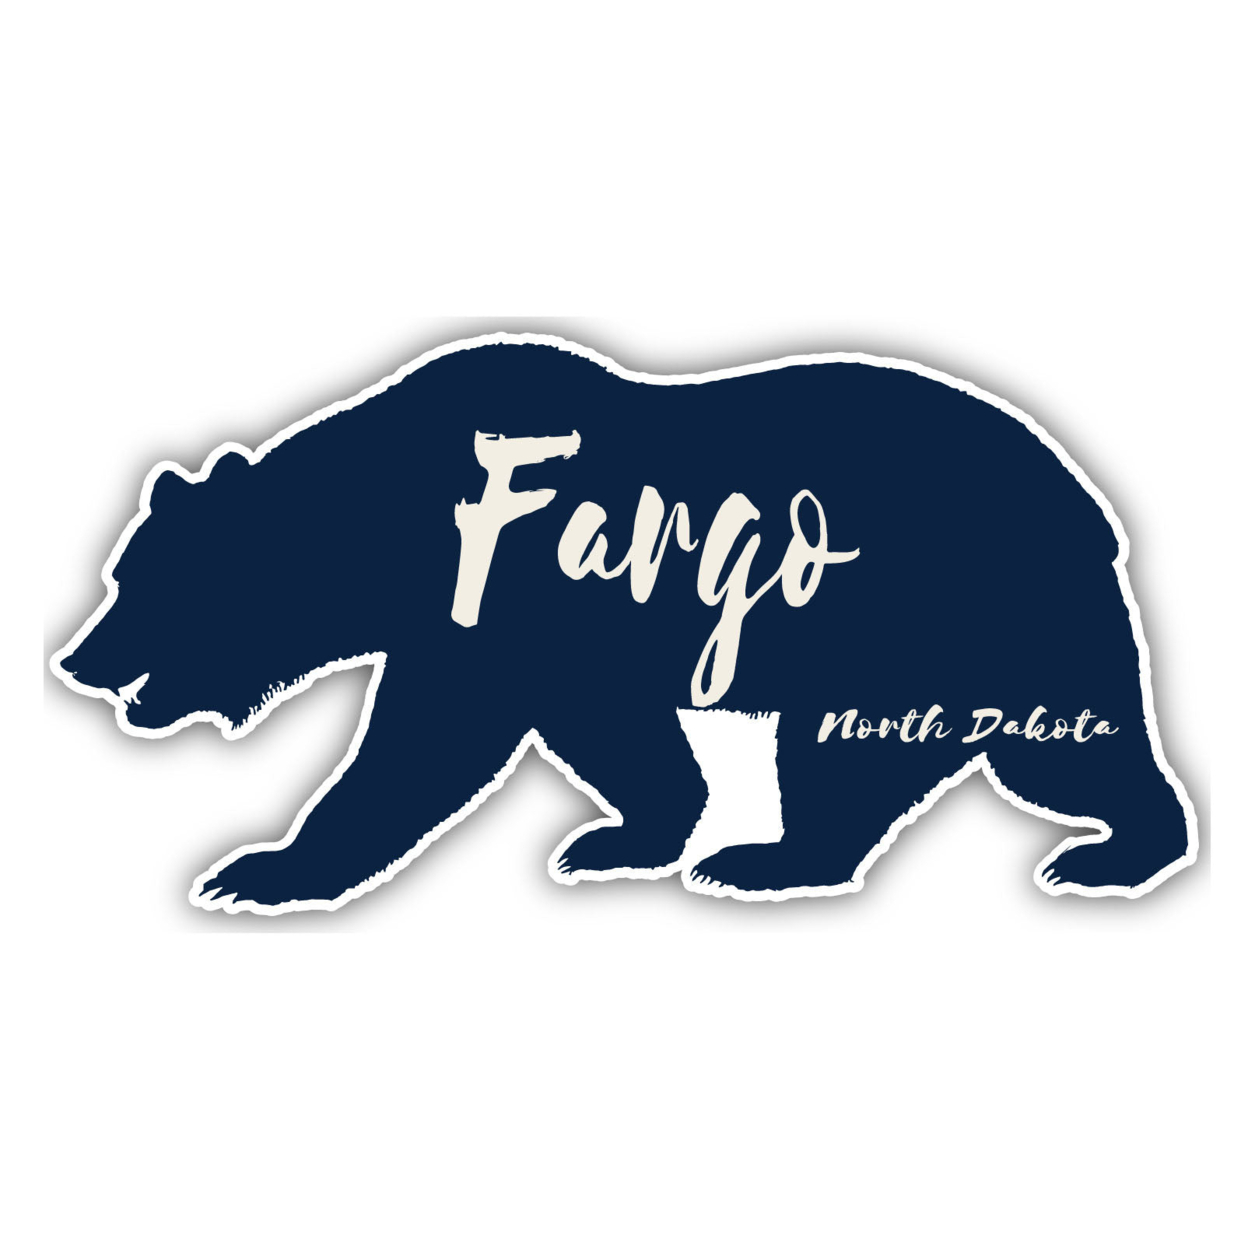 Fargo North Dakota Souvenir Decorative Stickers (Choose Theme And Size) - Single Unit, 6-Inch, Tent